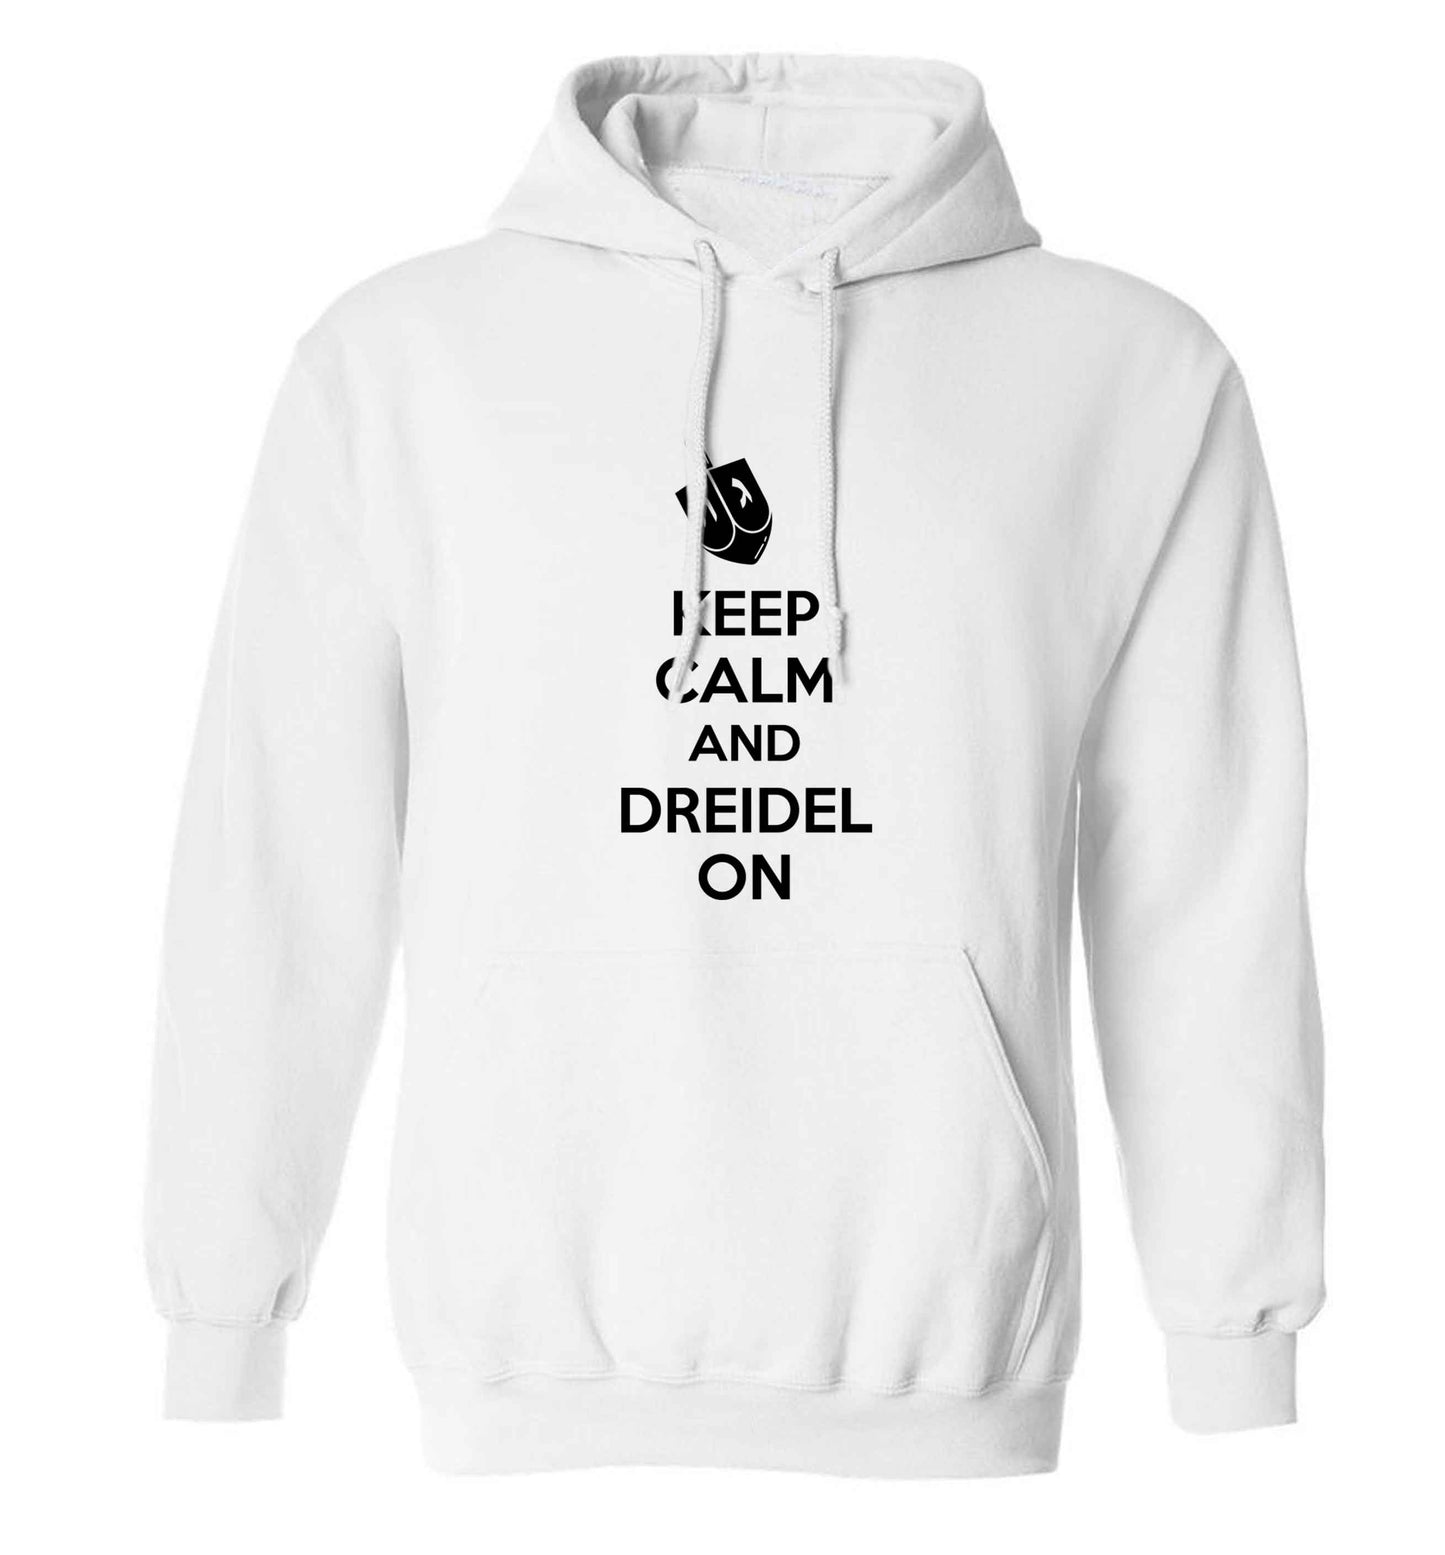 Keep calm and dreidel on adults unisex white hoodie 2XL